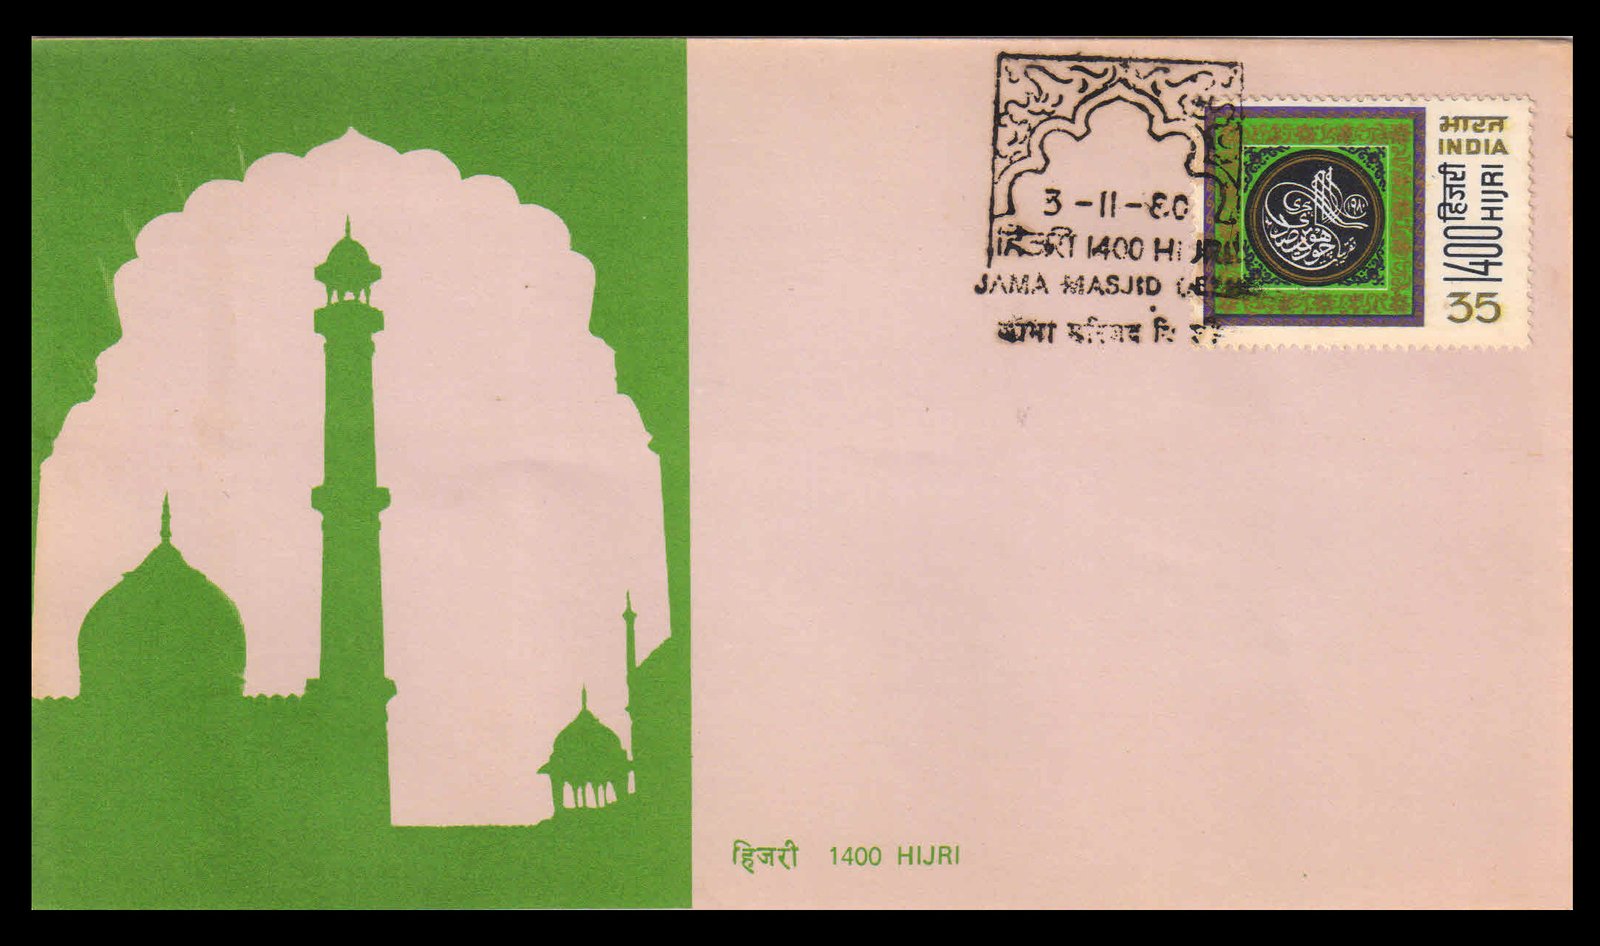 INDIA 3-11-1980 - HIJRI 1400, First Day Cover with JAMA MASJID, DELHI, Black Cancellation